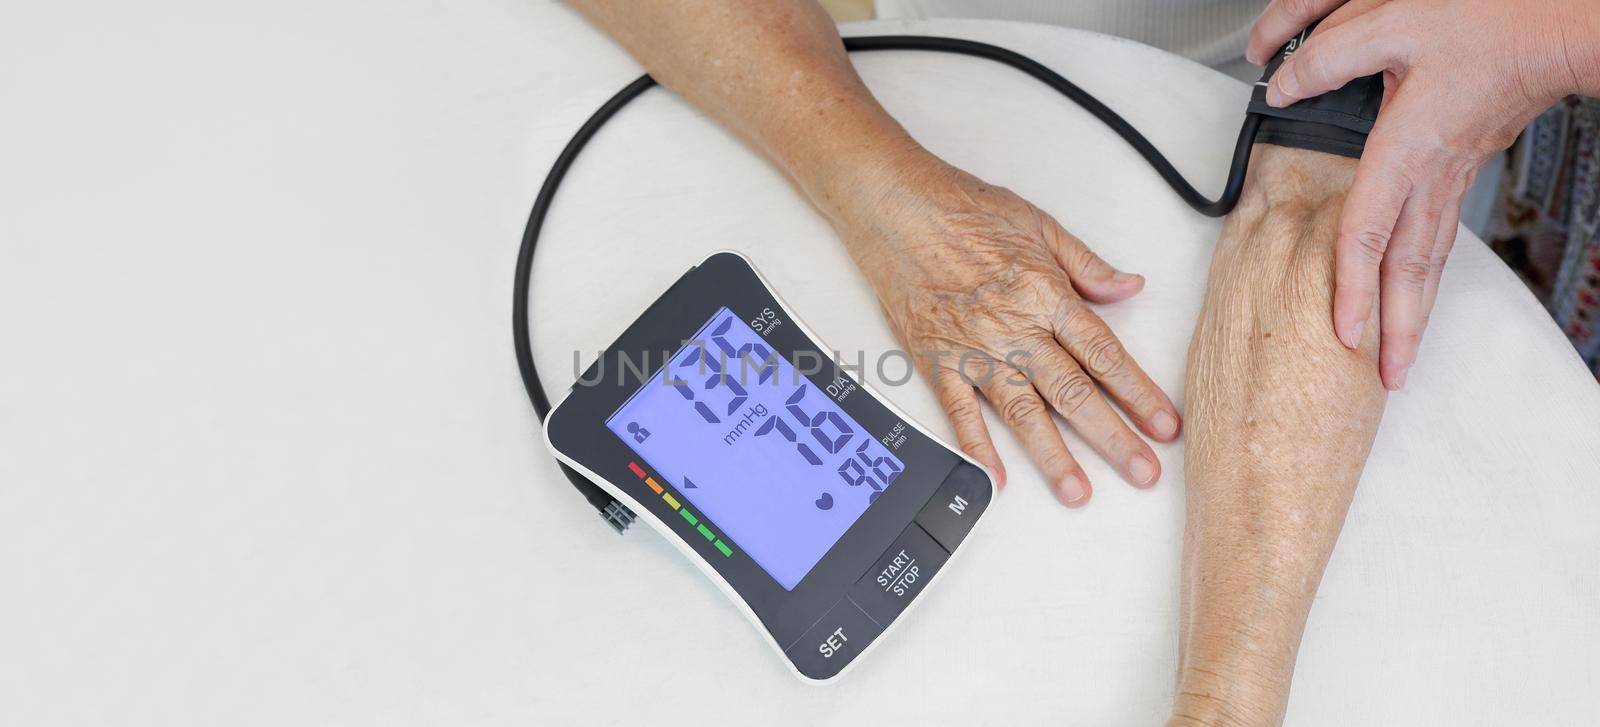 Daughter checking blood pressure (hypertension) of elderly mother at home